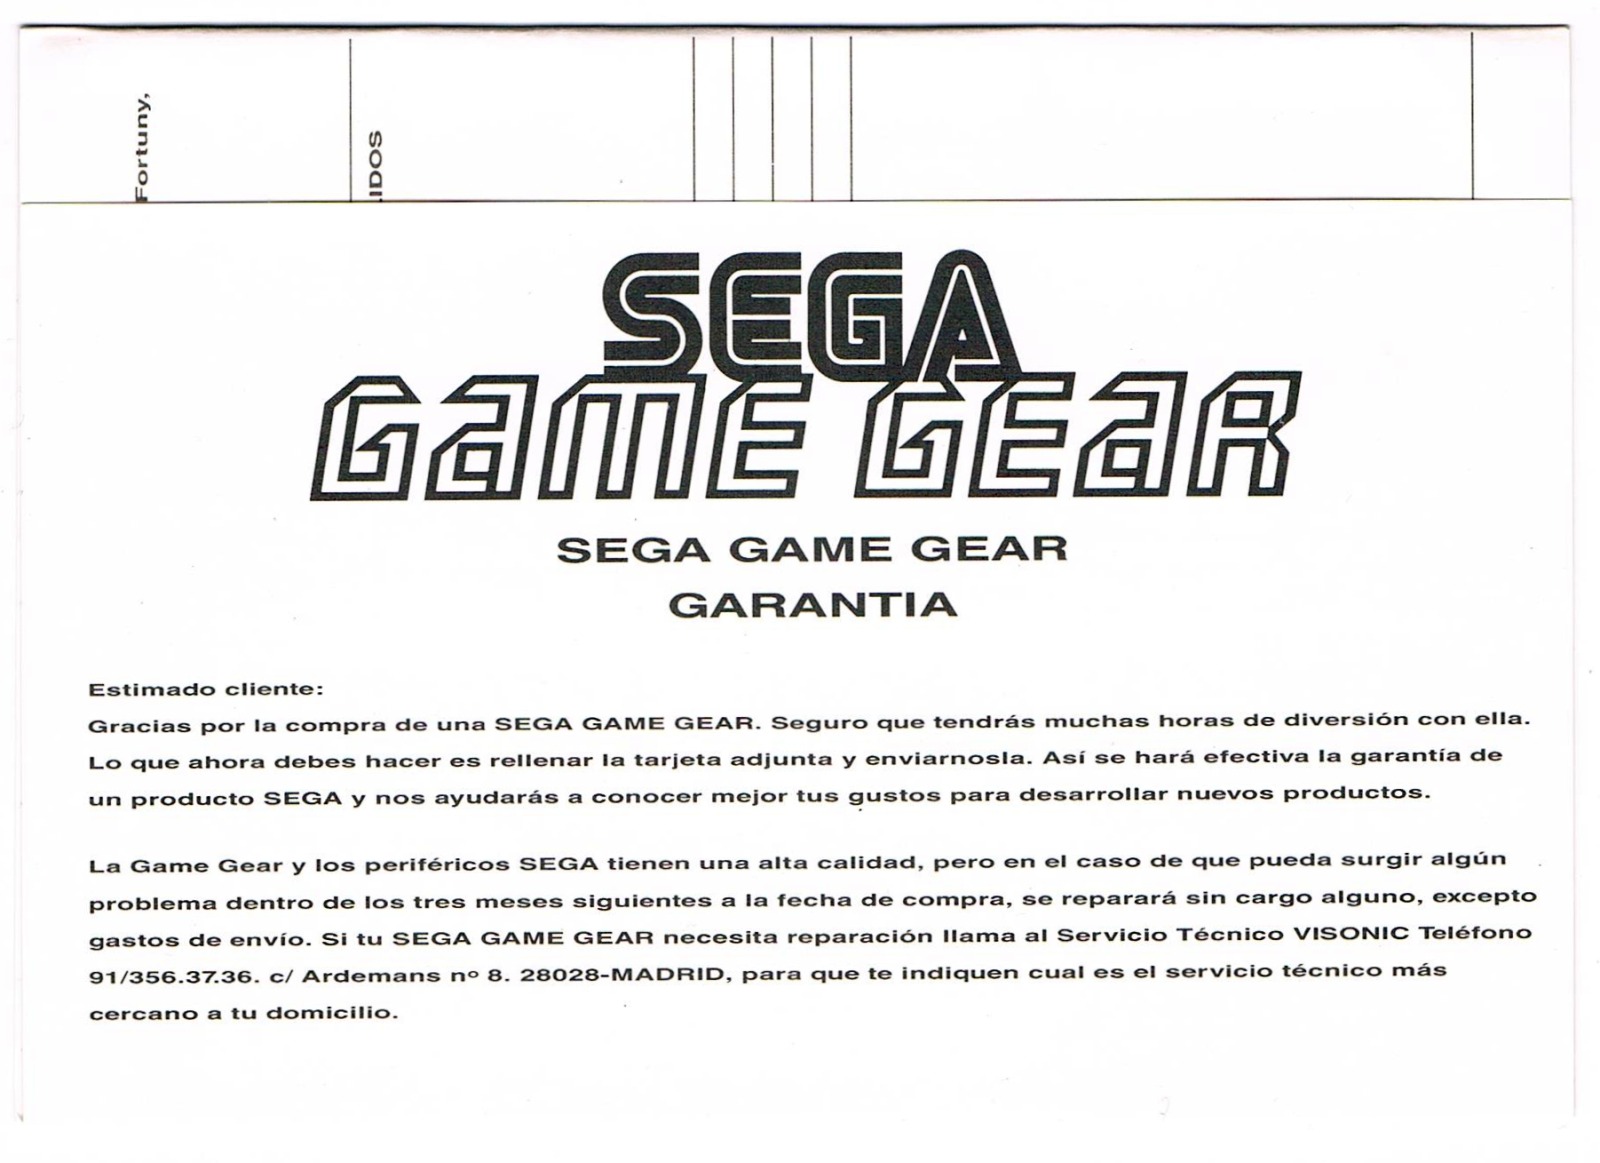 Sega Game Gear Spanish Warranty Flyer